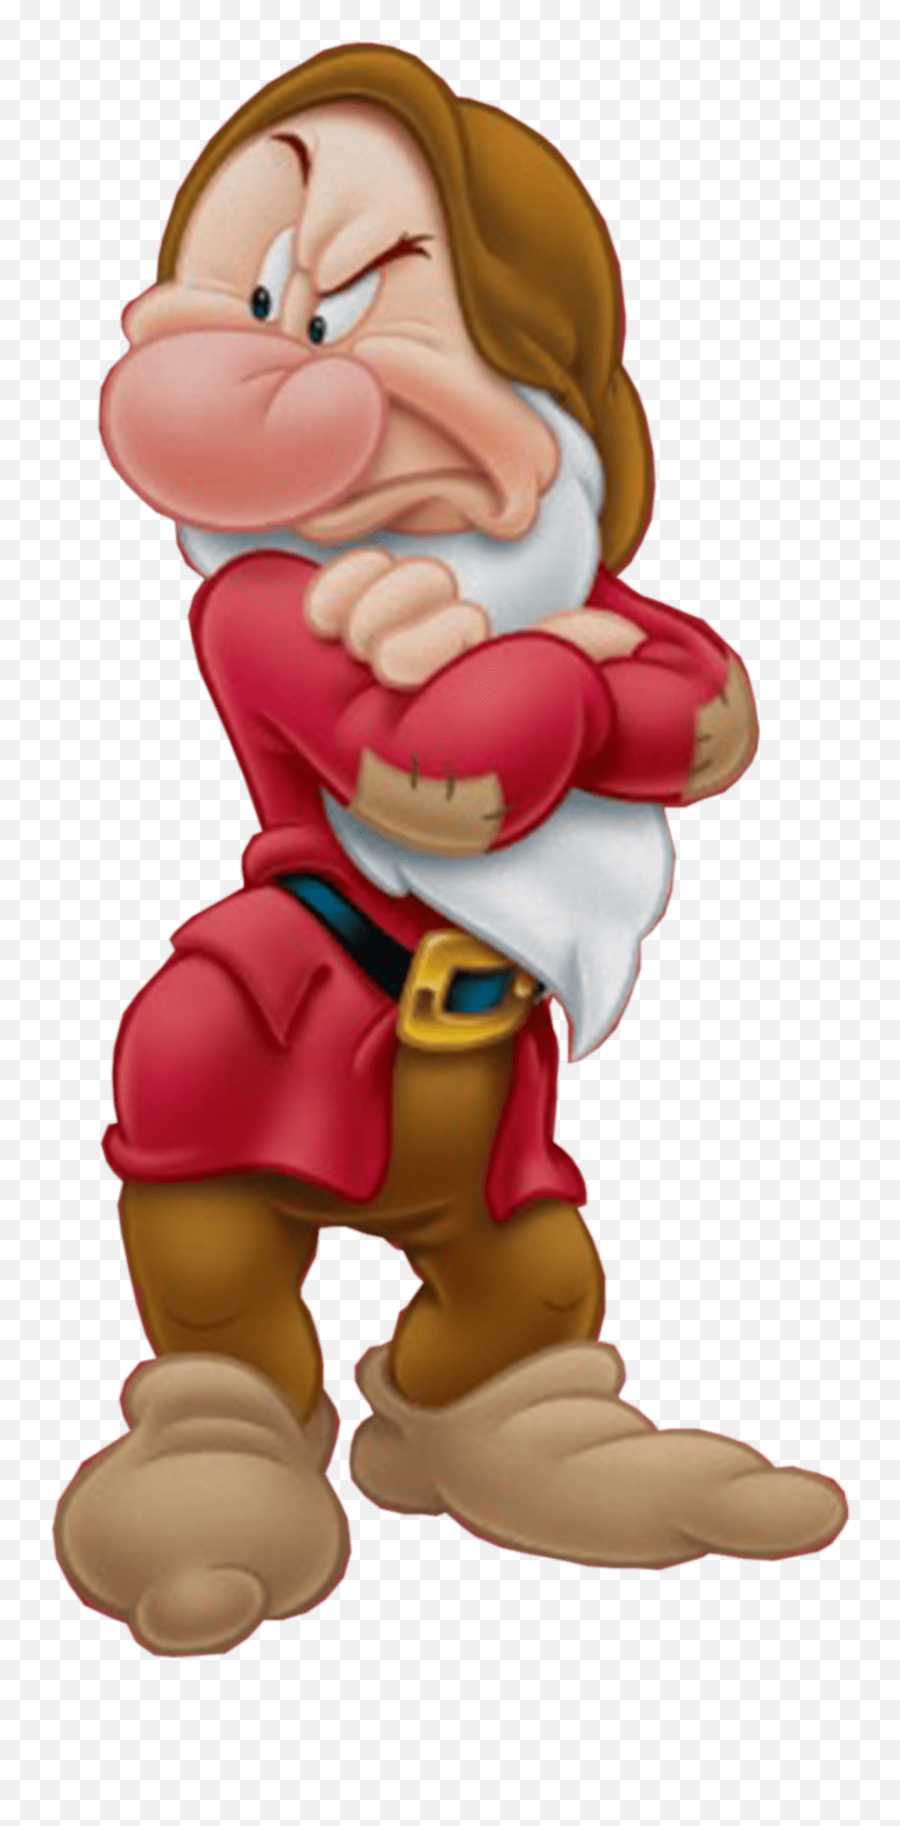 Download Dwarf Png Image For Free - Grumpy The Seven Dwarfs,Midget Png